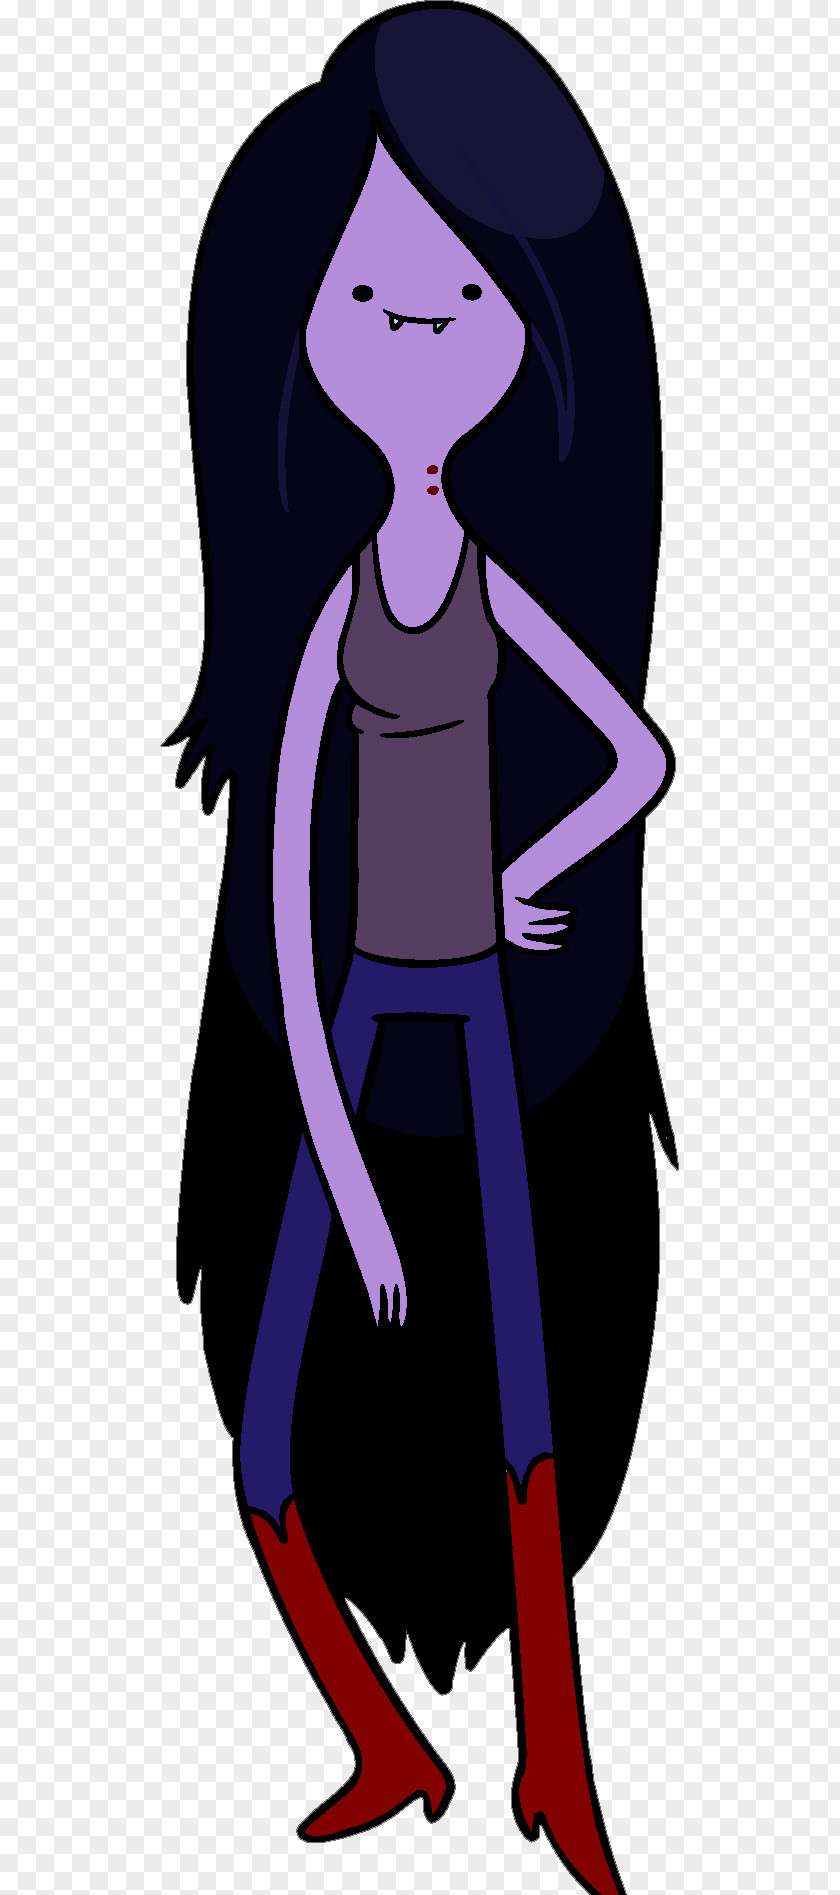 Finn The Human Marceline Vampire Queen Ice King Princess Bubblegum Character PNG